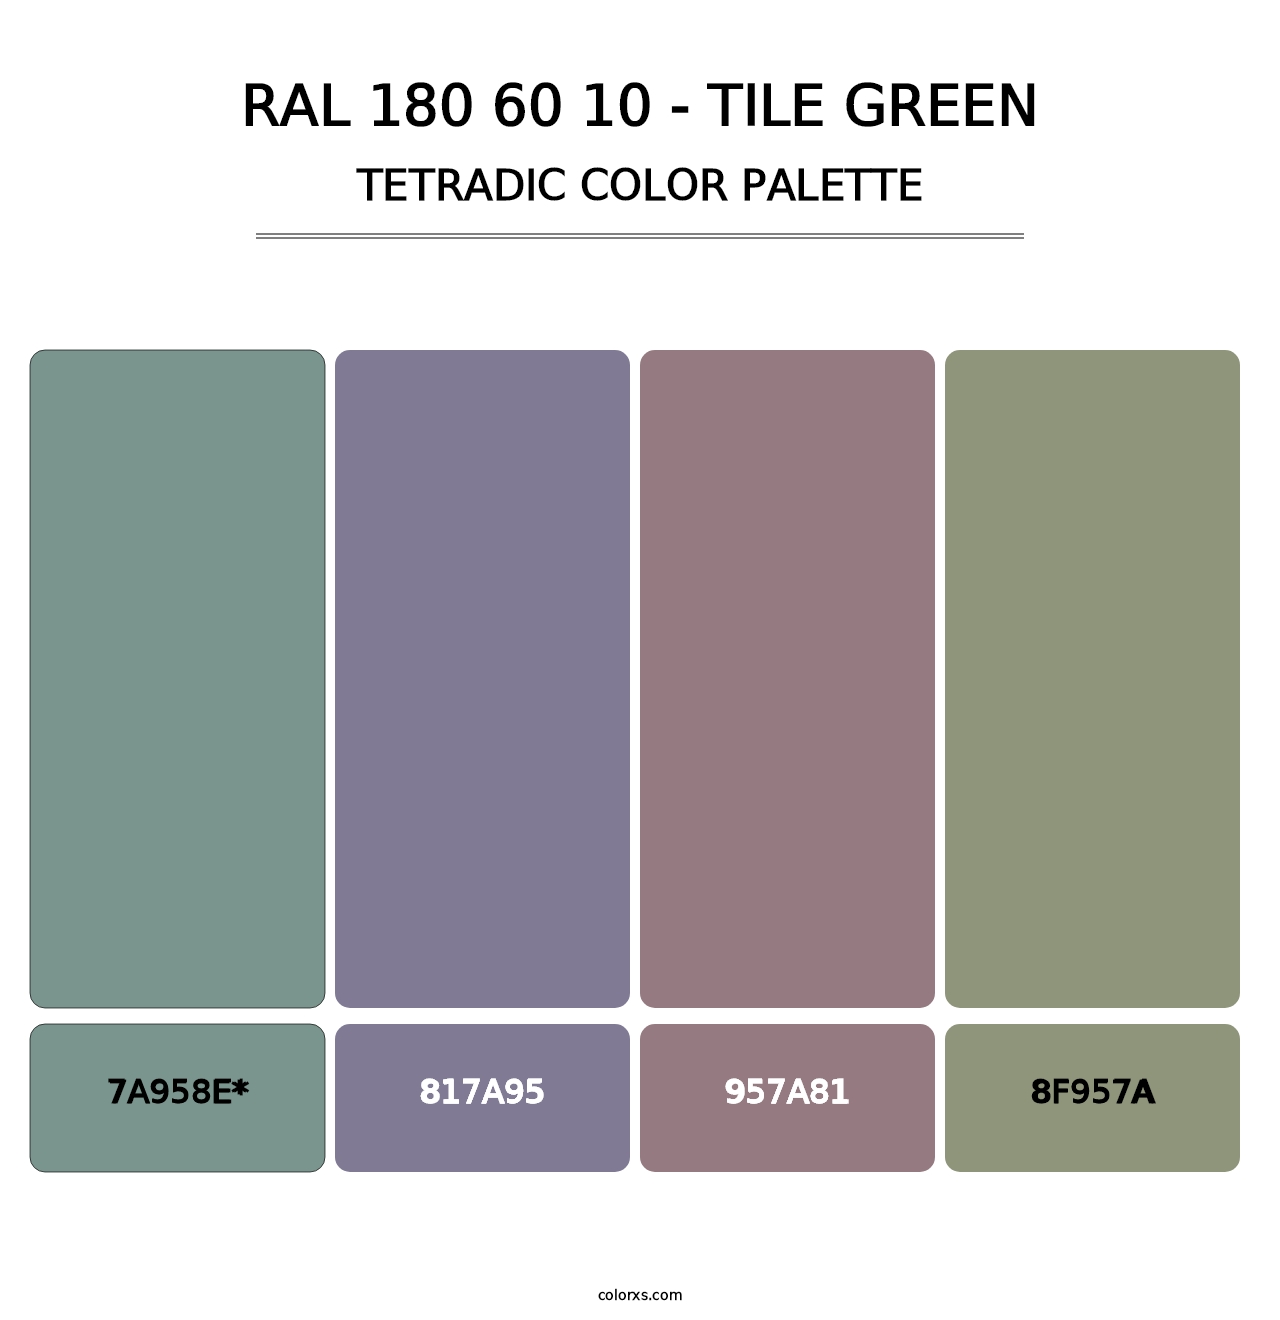 RAL 180 60 10 - Tile Green - Tetradic Color Palette